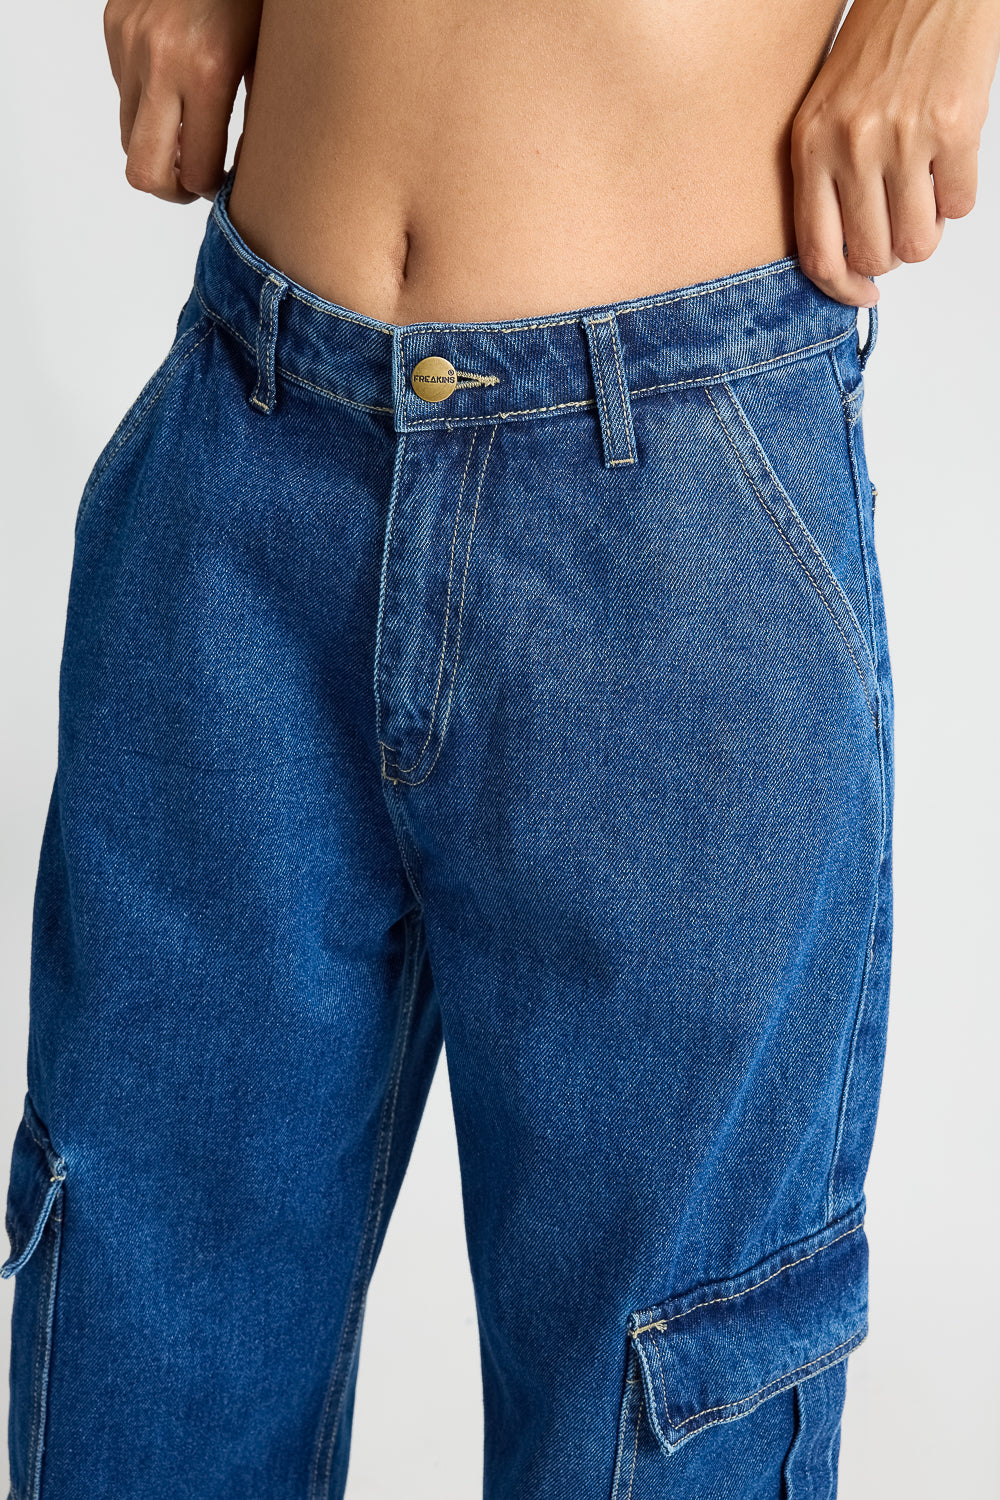 Indigo Blue Utility Pocket Cargo Denim Jeans